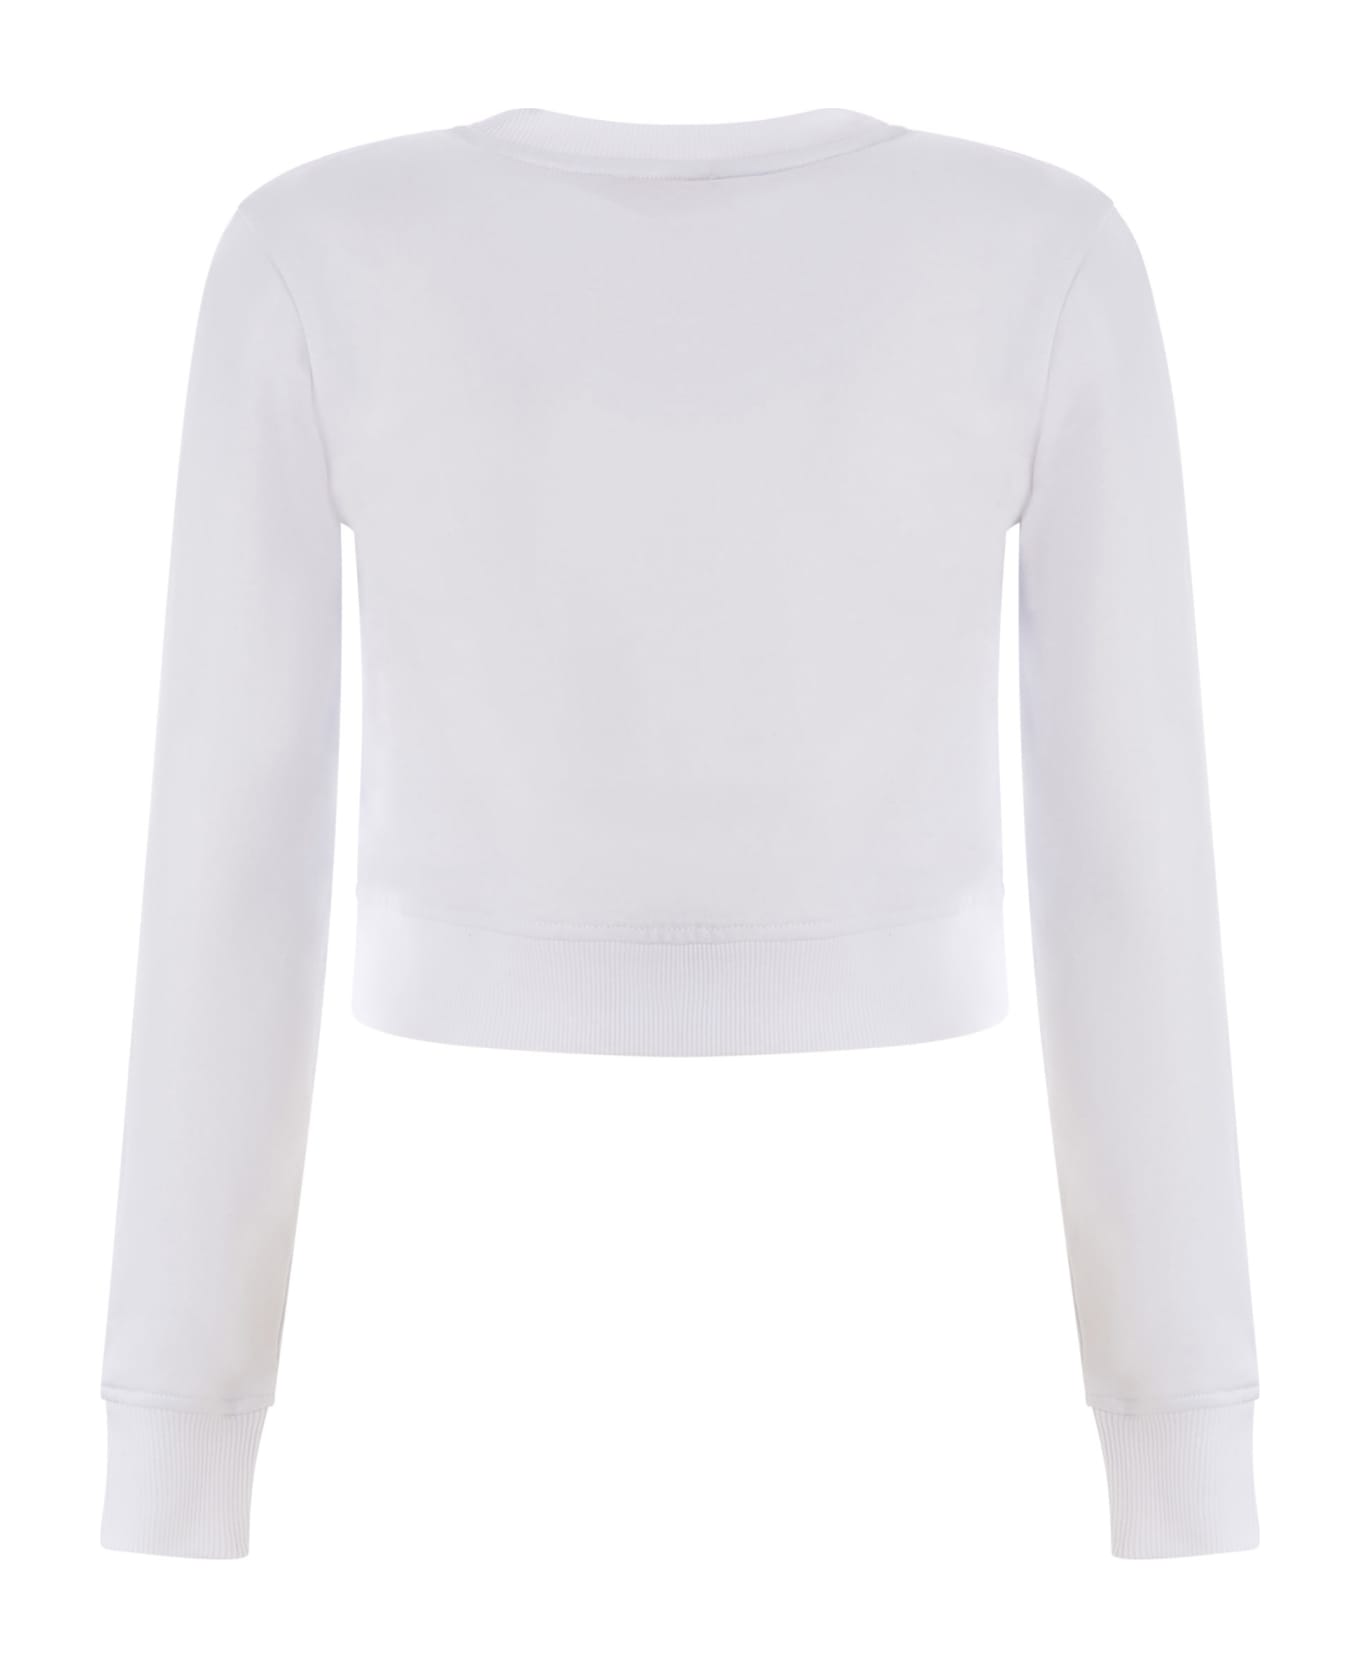 Diesel F-slimmy-od Felpa White Cropped Sweatshirt With Cut-out Oval-d - F Slimmy Od - White